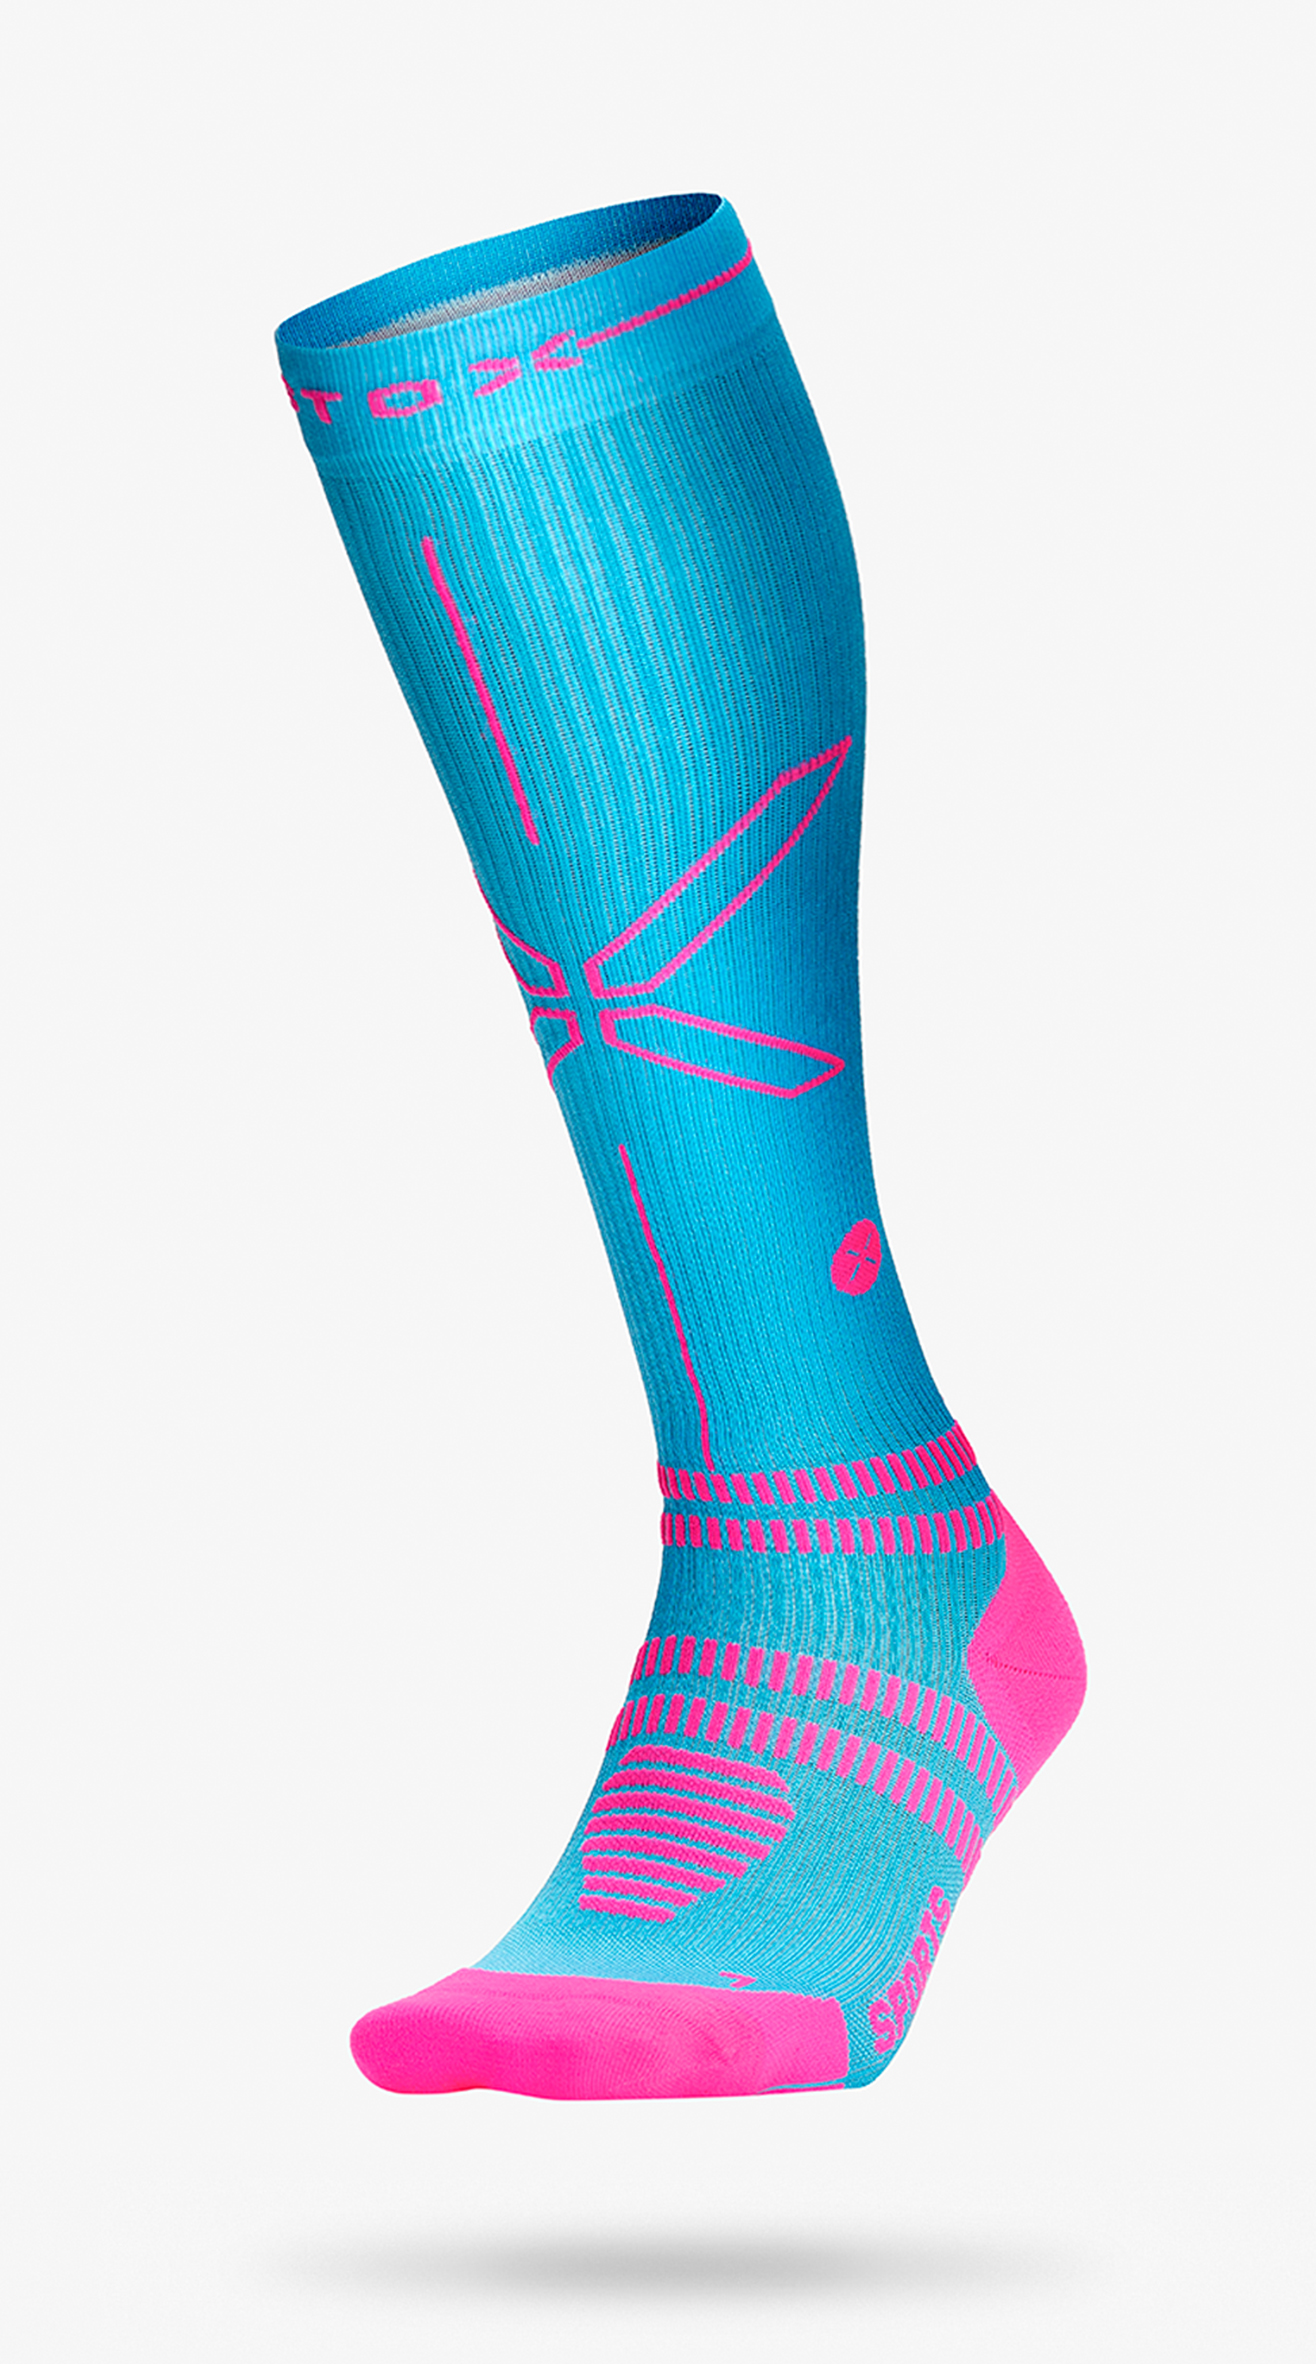 Victoria's Secret PINK Ankle Socks Sport Training Gym Running Socks Size 4-7 UK 